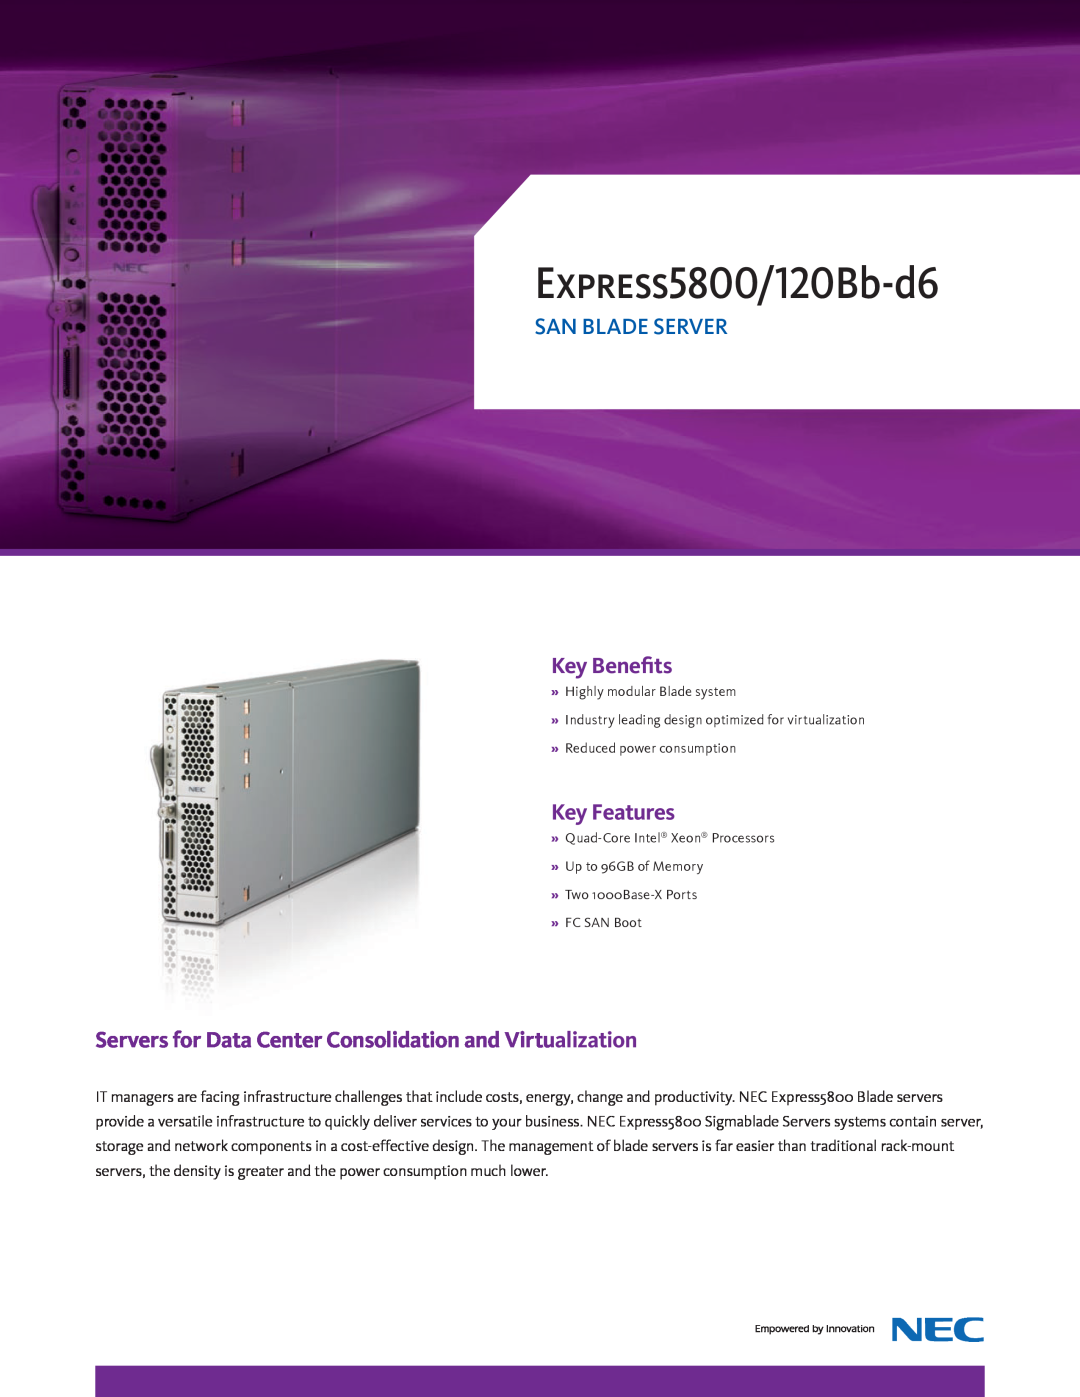 Univex Express120Bb-d6, Express5800 manual EXPRESS5800/120Bb-d6, Key Benefits, Key Features, San Blade Server 